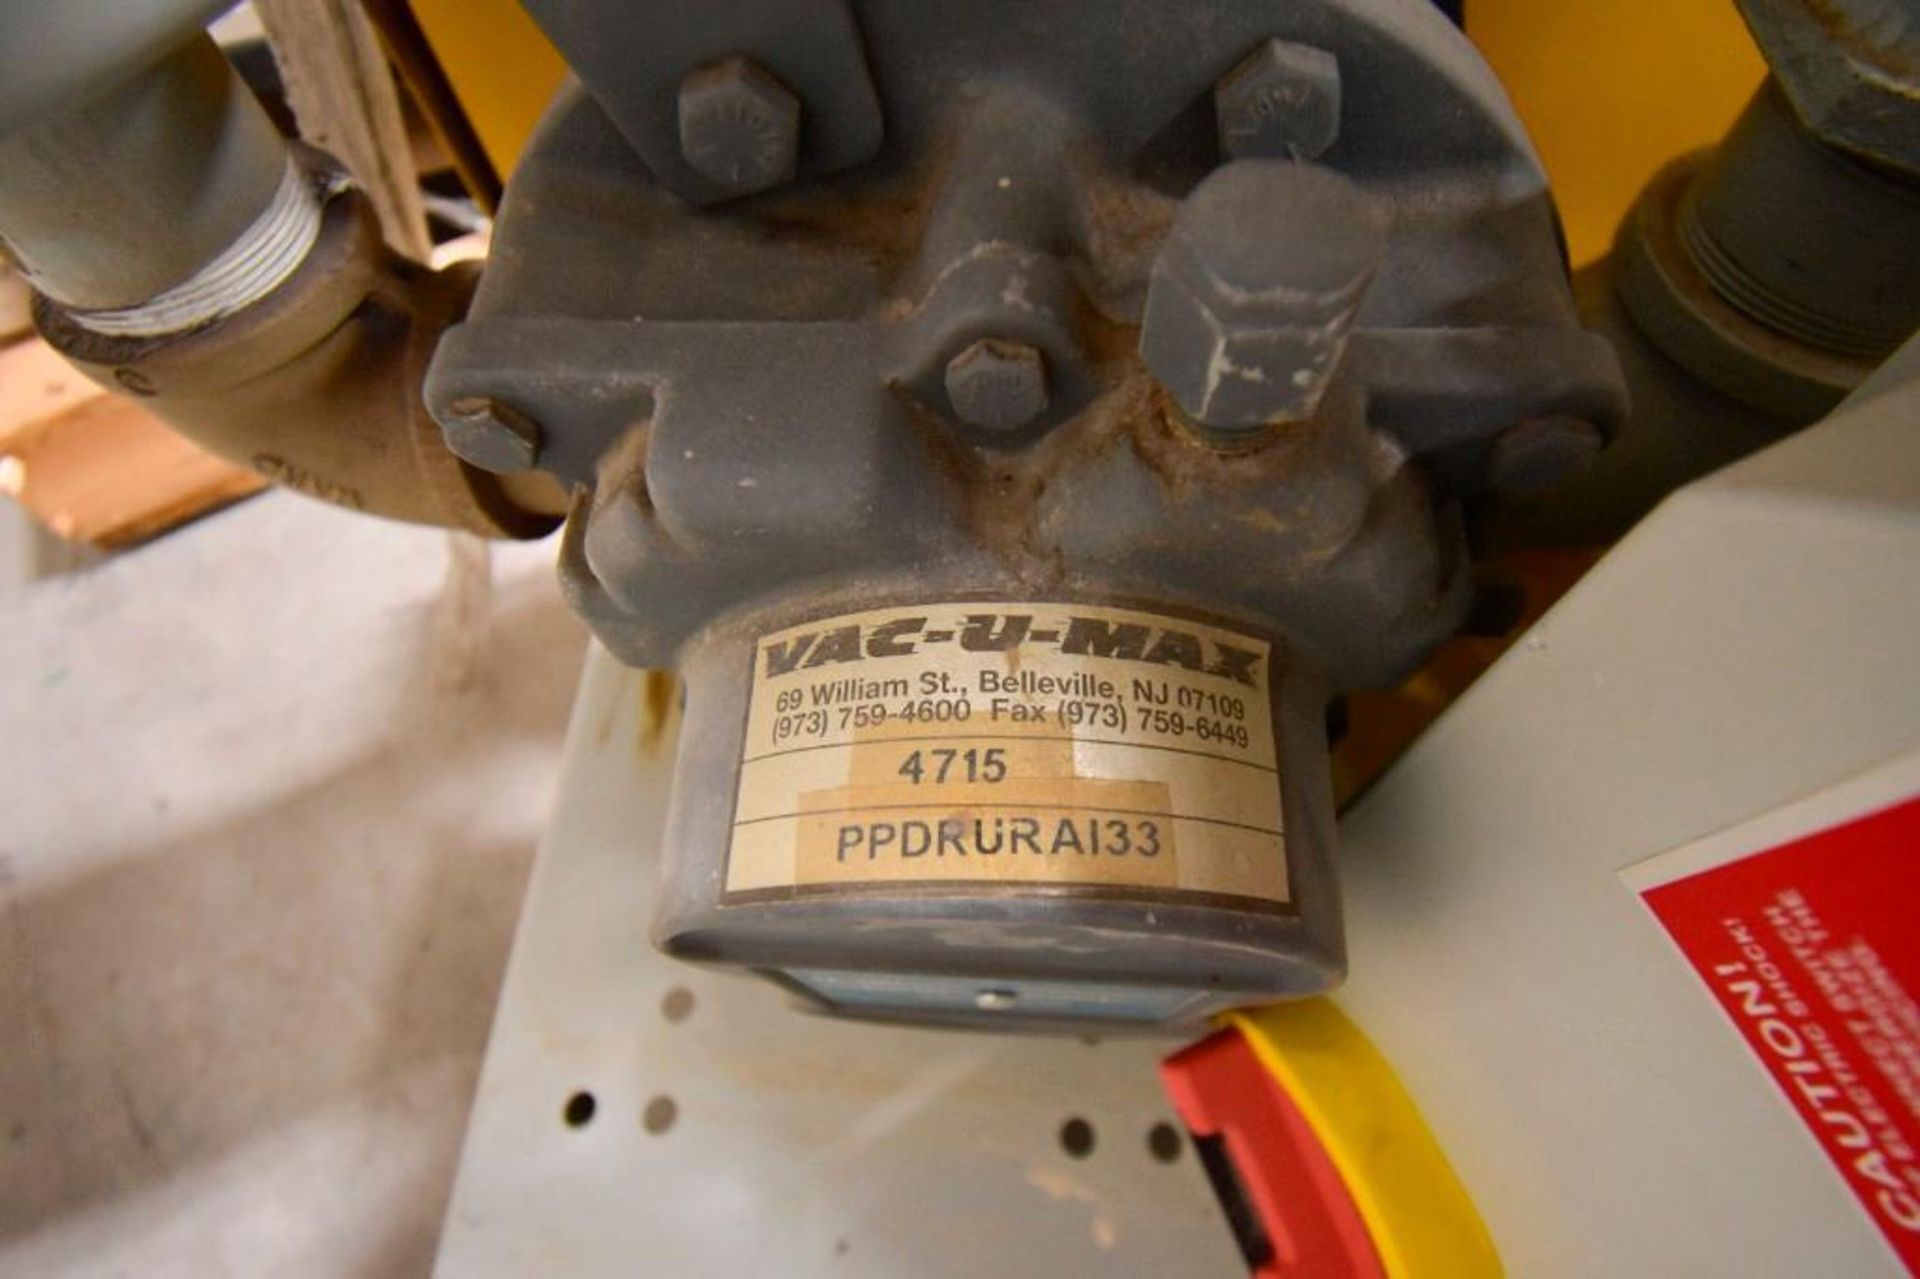 Vac - U - Max Pneumatic Conveyor Vacuum Blower - Image 4 of 5